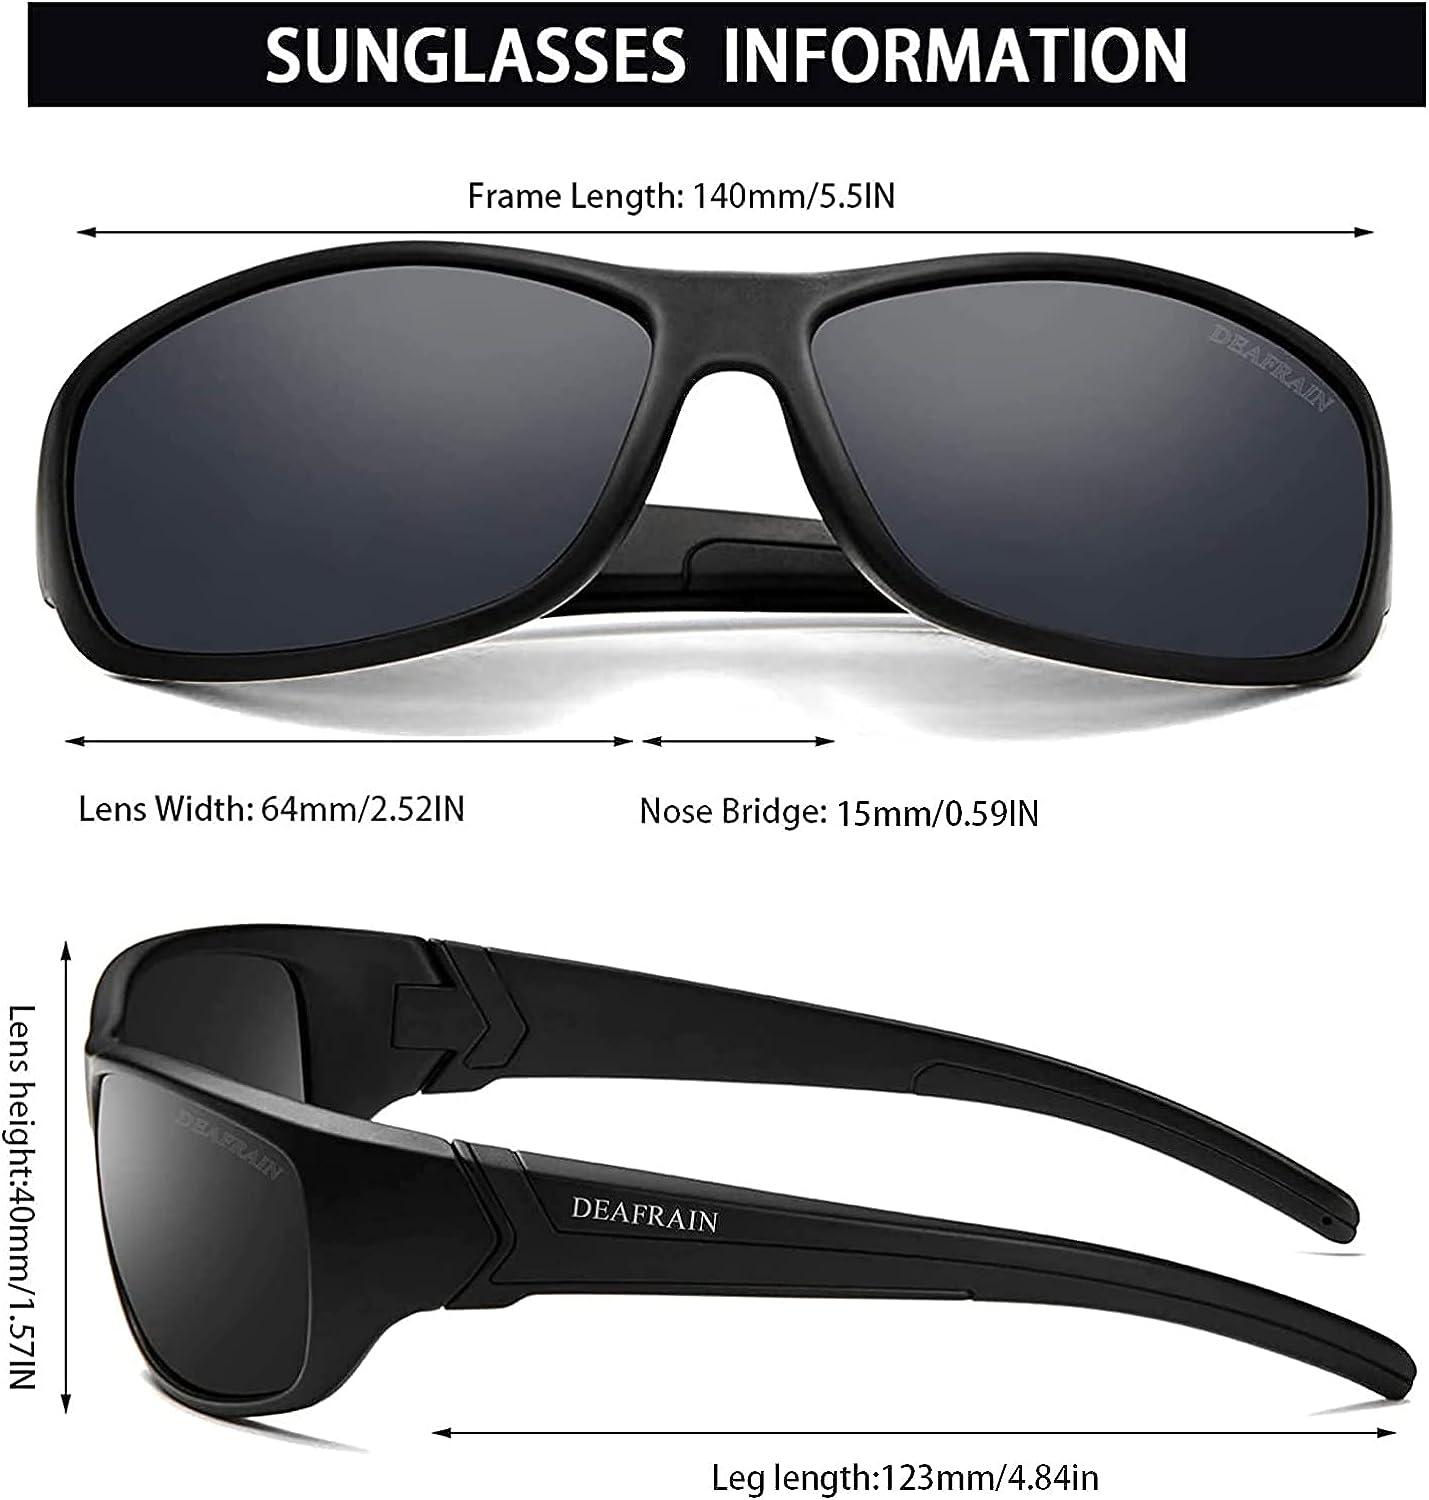 DEAFRAIN Polarized Sports Sunglasses for Men Women Driving Fishing